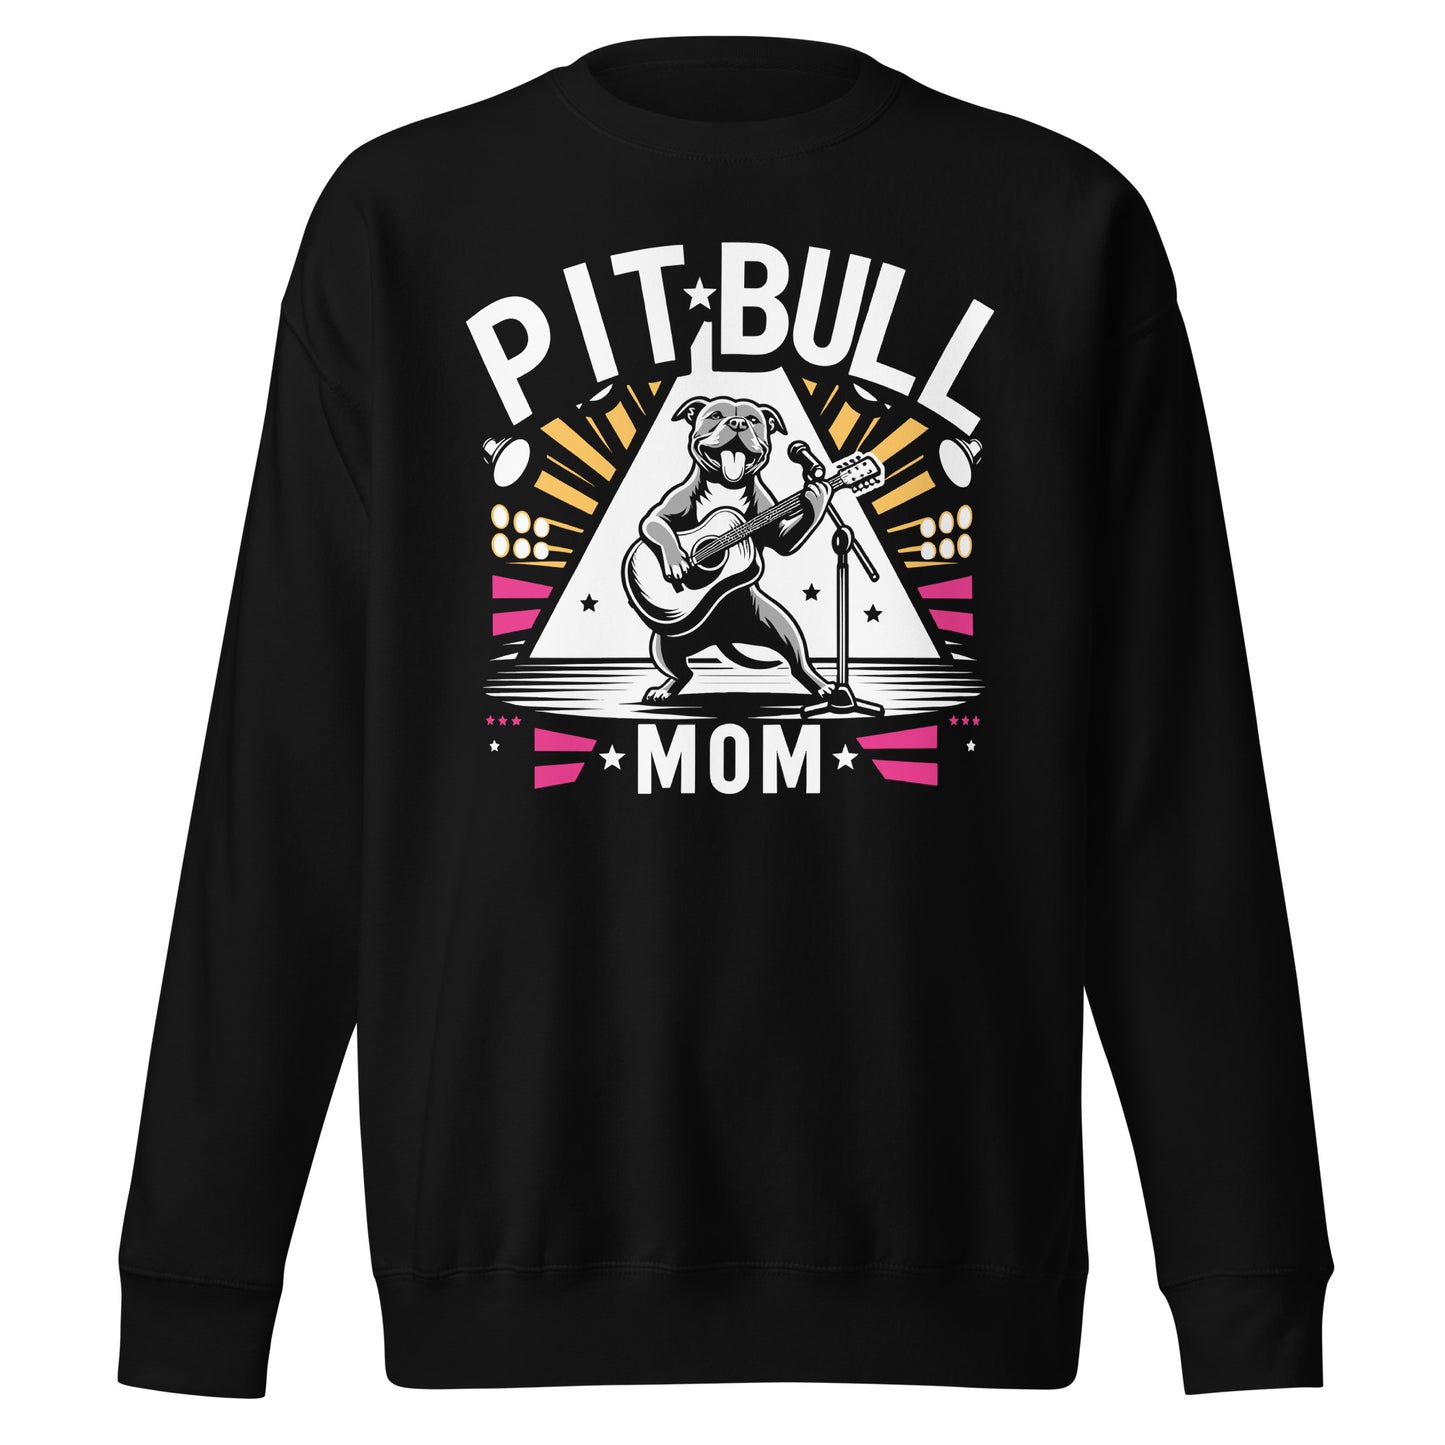 "Rockstar Paws" - Pitbull Mom Premium Sweatshirt - Pittie Choy